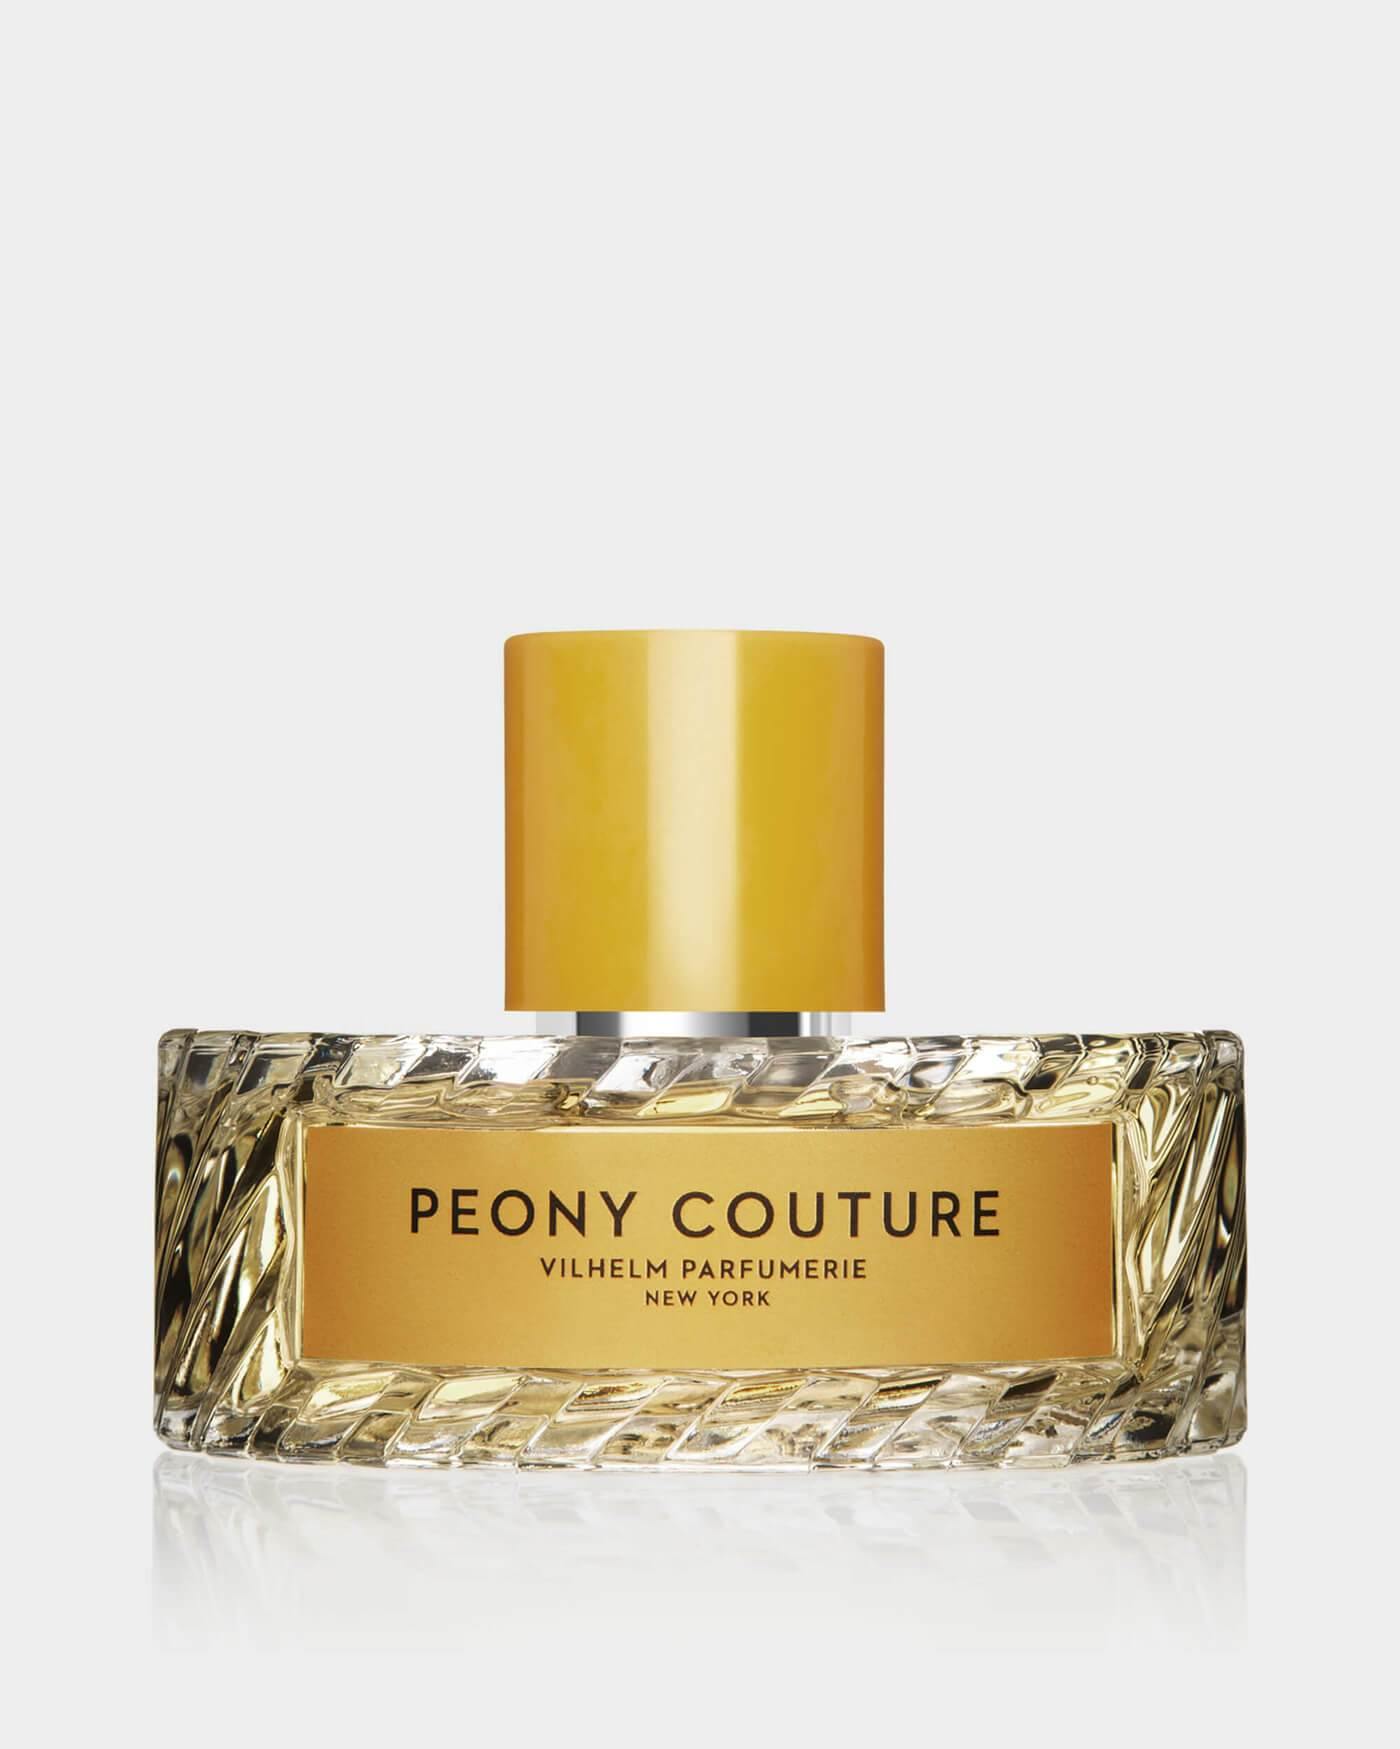 PEONY COUTURE - Vilhelm Parfumerie